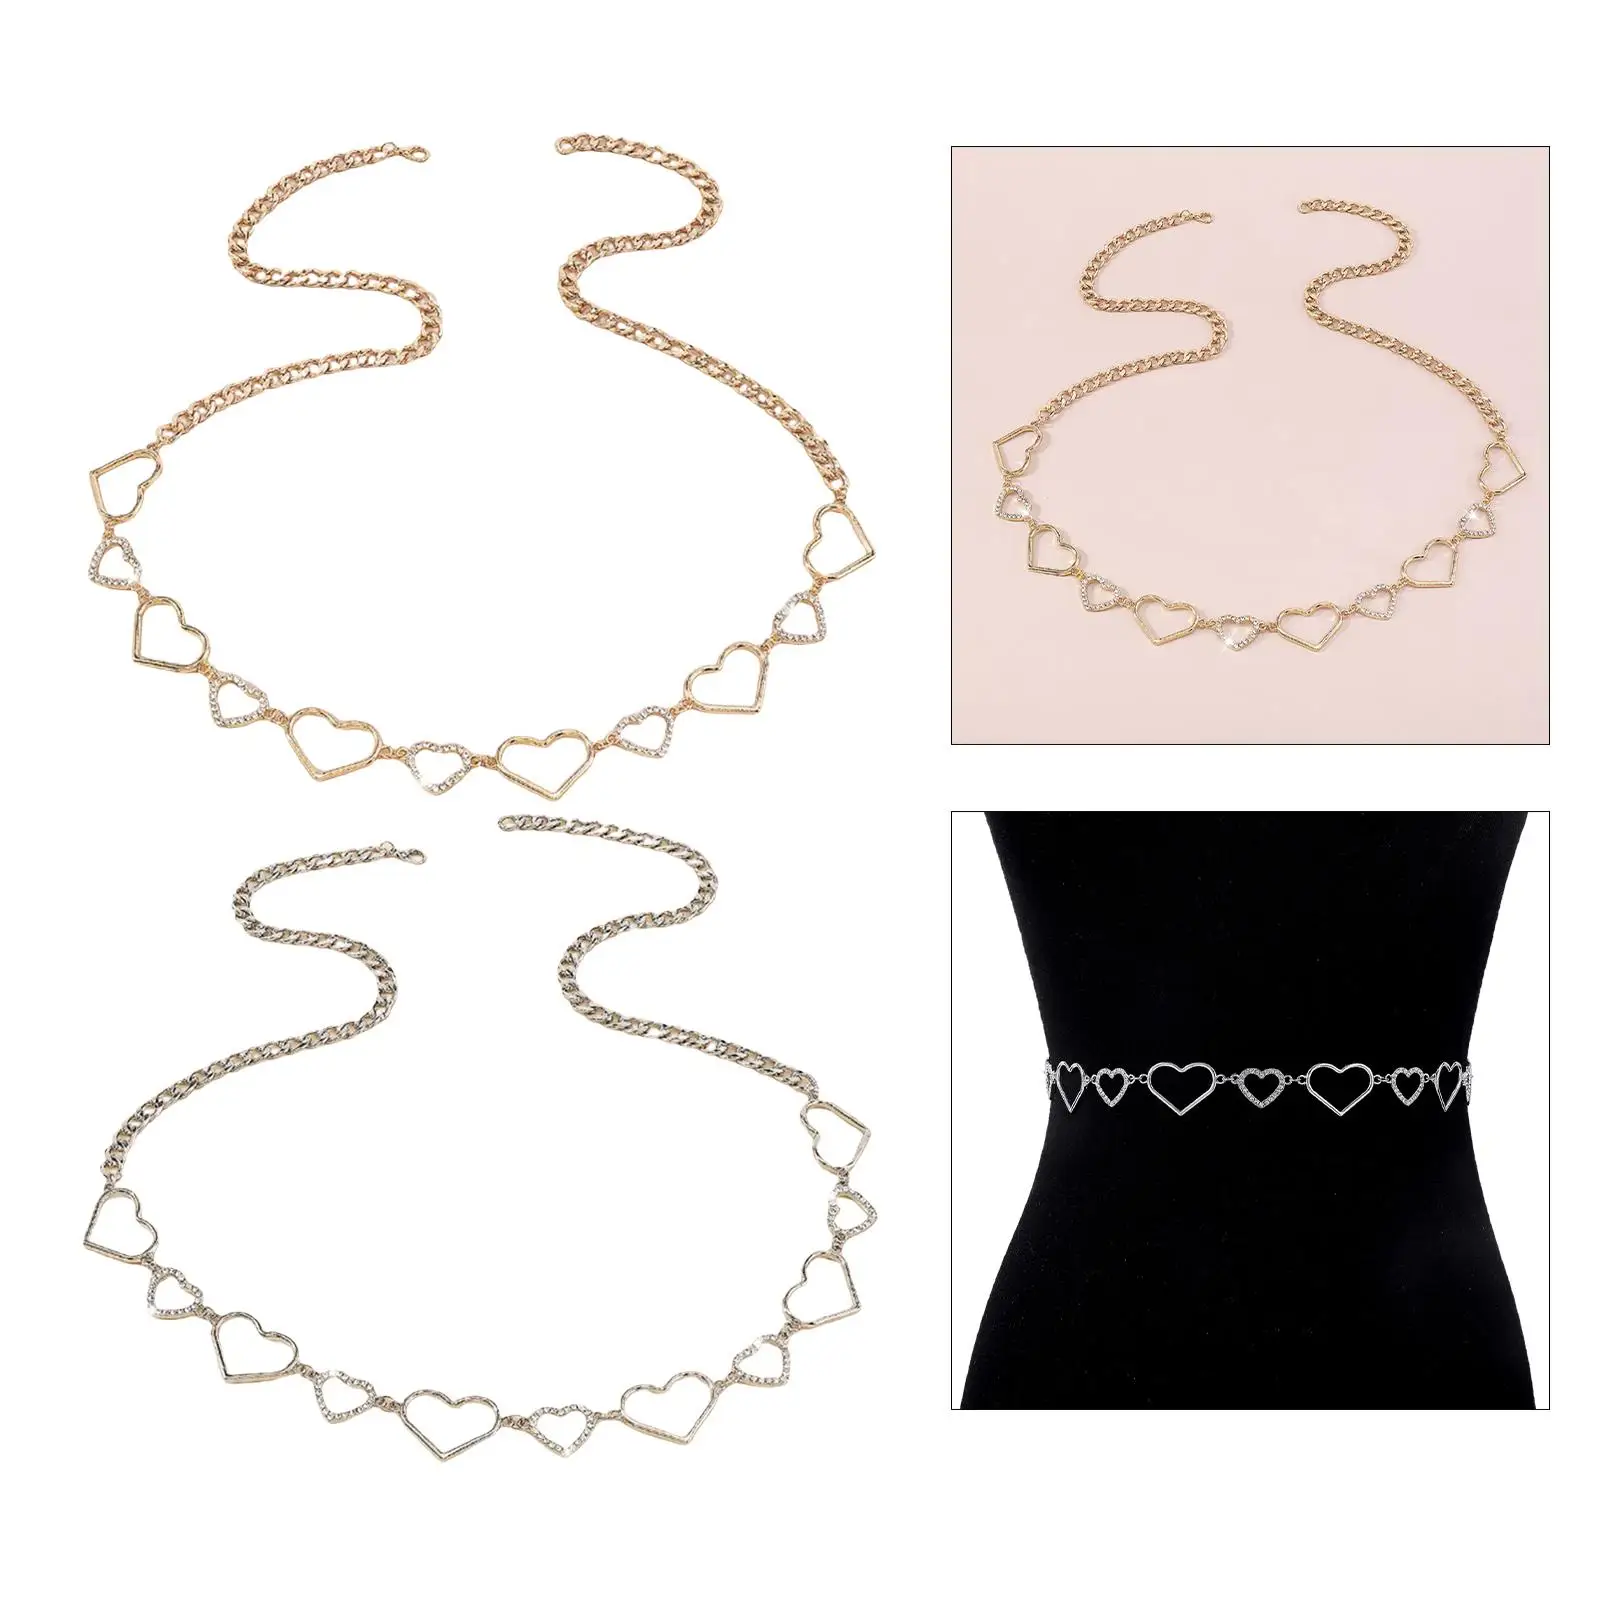 Fashion Women Waist Chain Belt Rhinestone Crystal Adjustable Heart Decorative Body Link for Beach Outfit Girls Pants